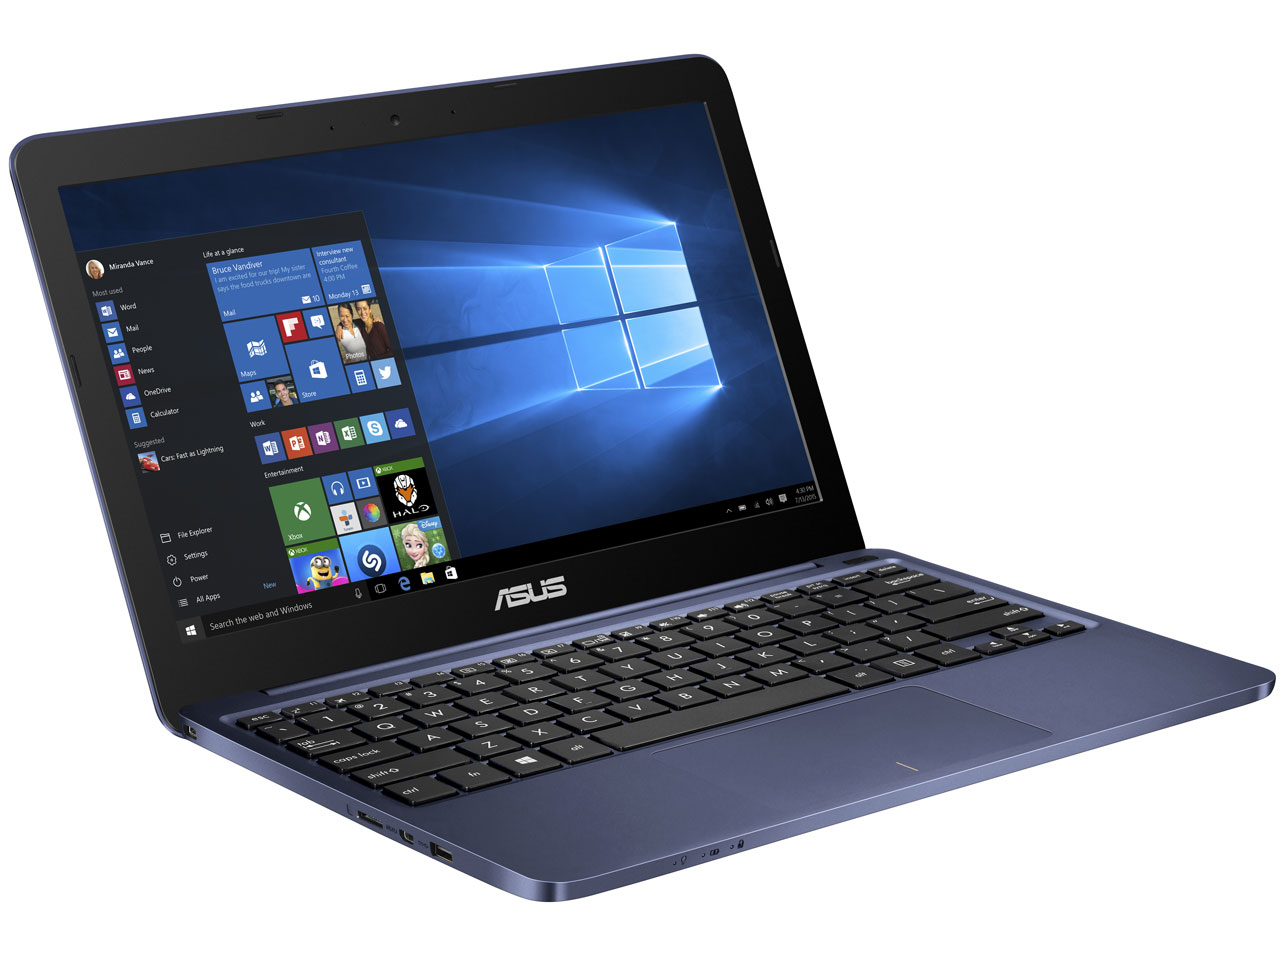 ASUS VivoBook E200HA の製品画像